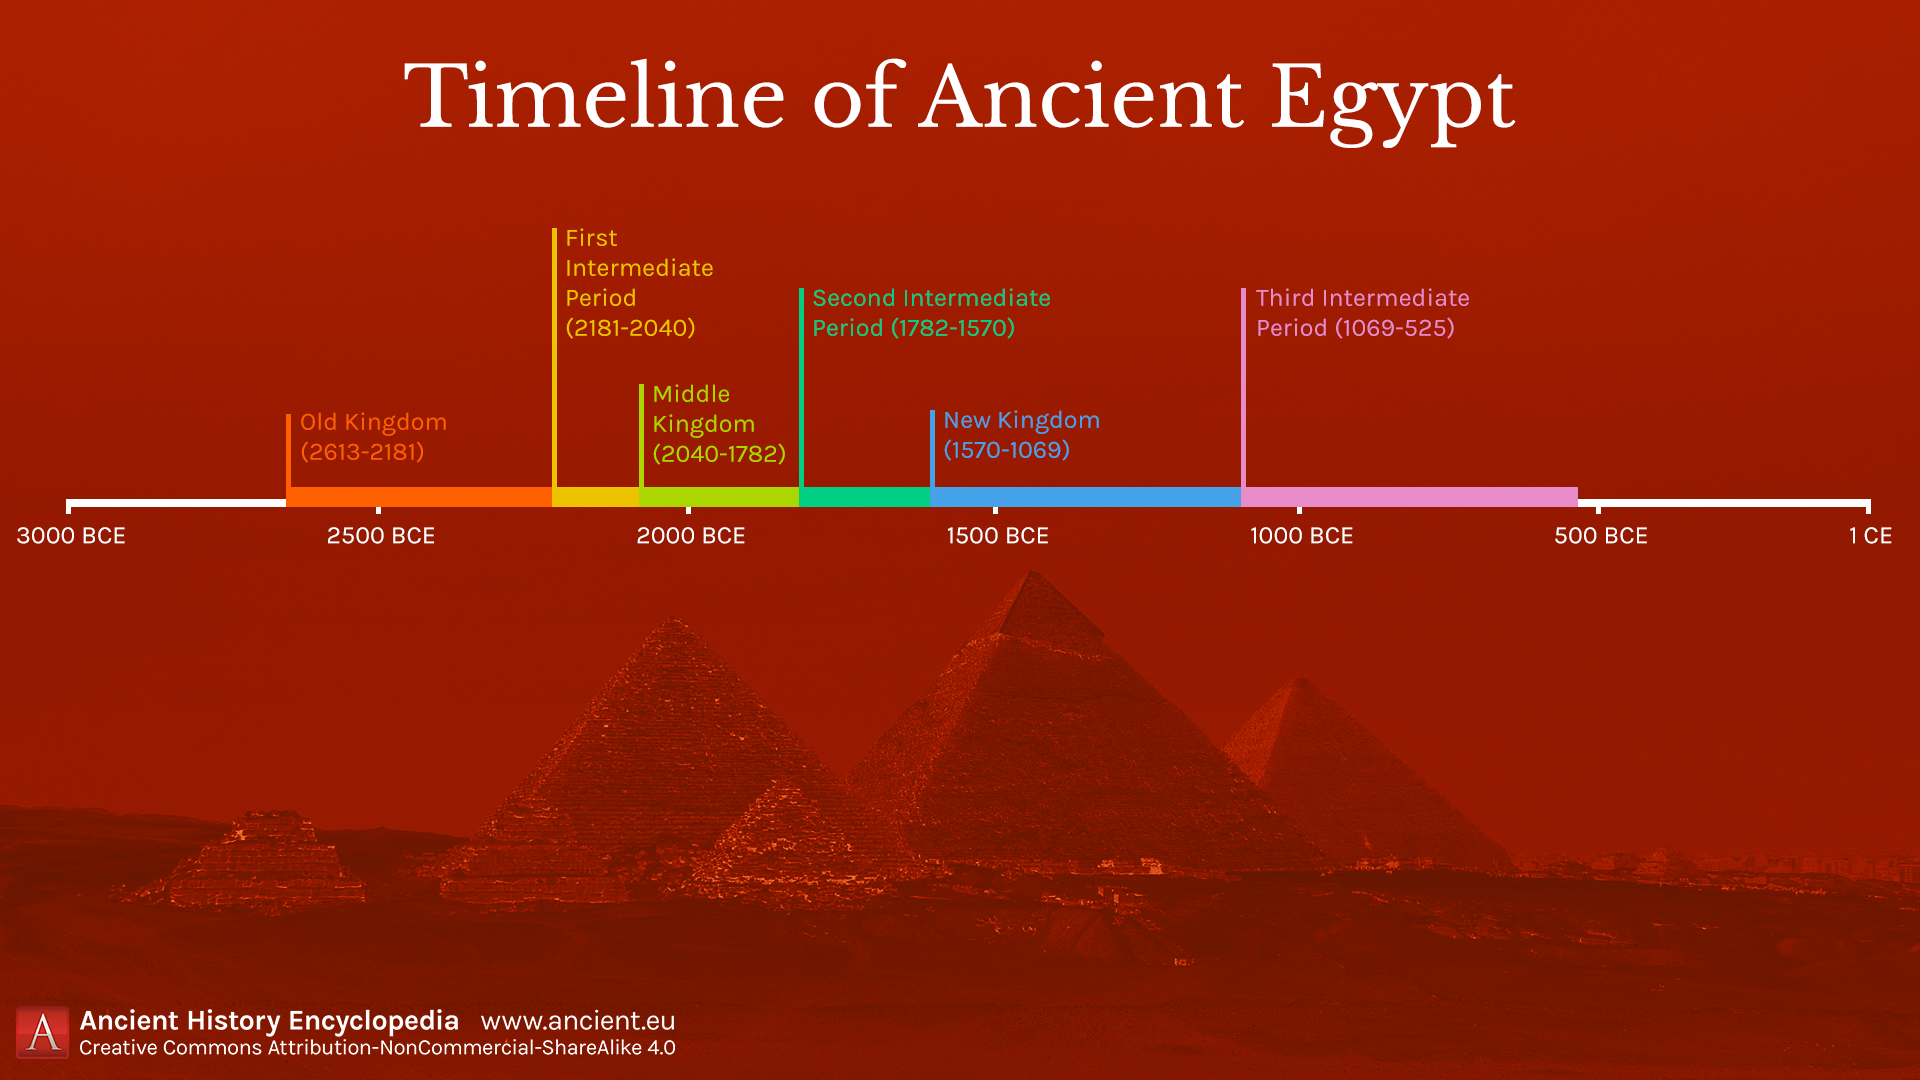 Timeline of Ancient Egypt (Illustration) - World History Encyclopedia